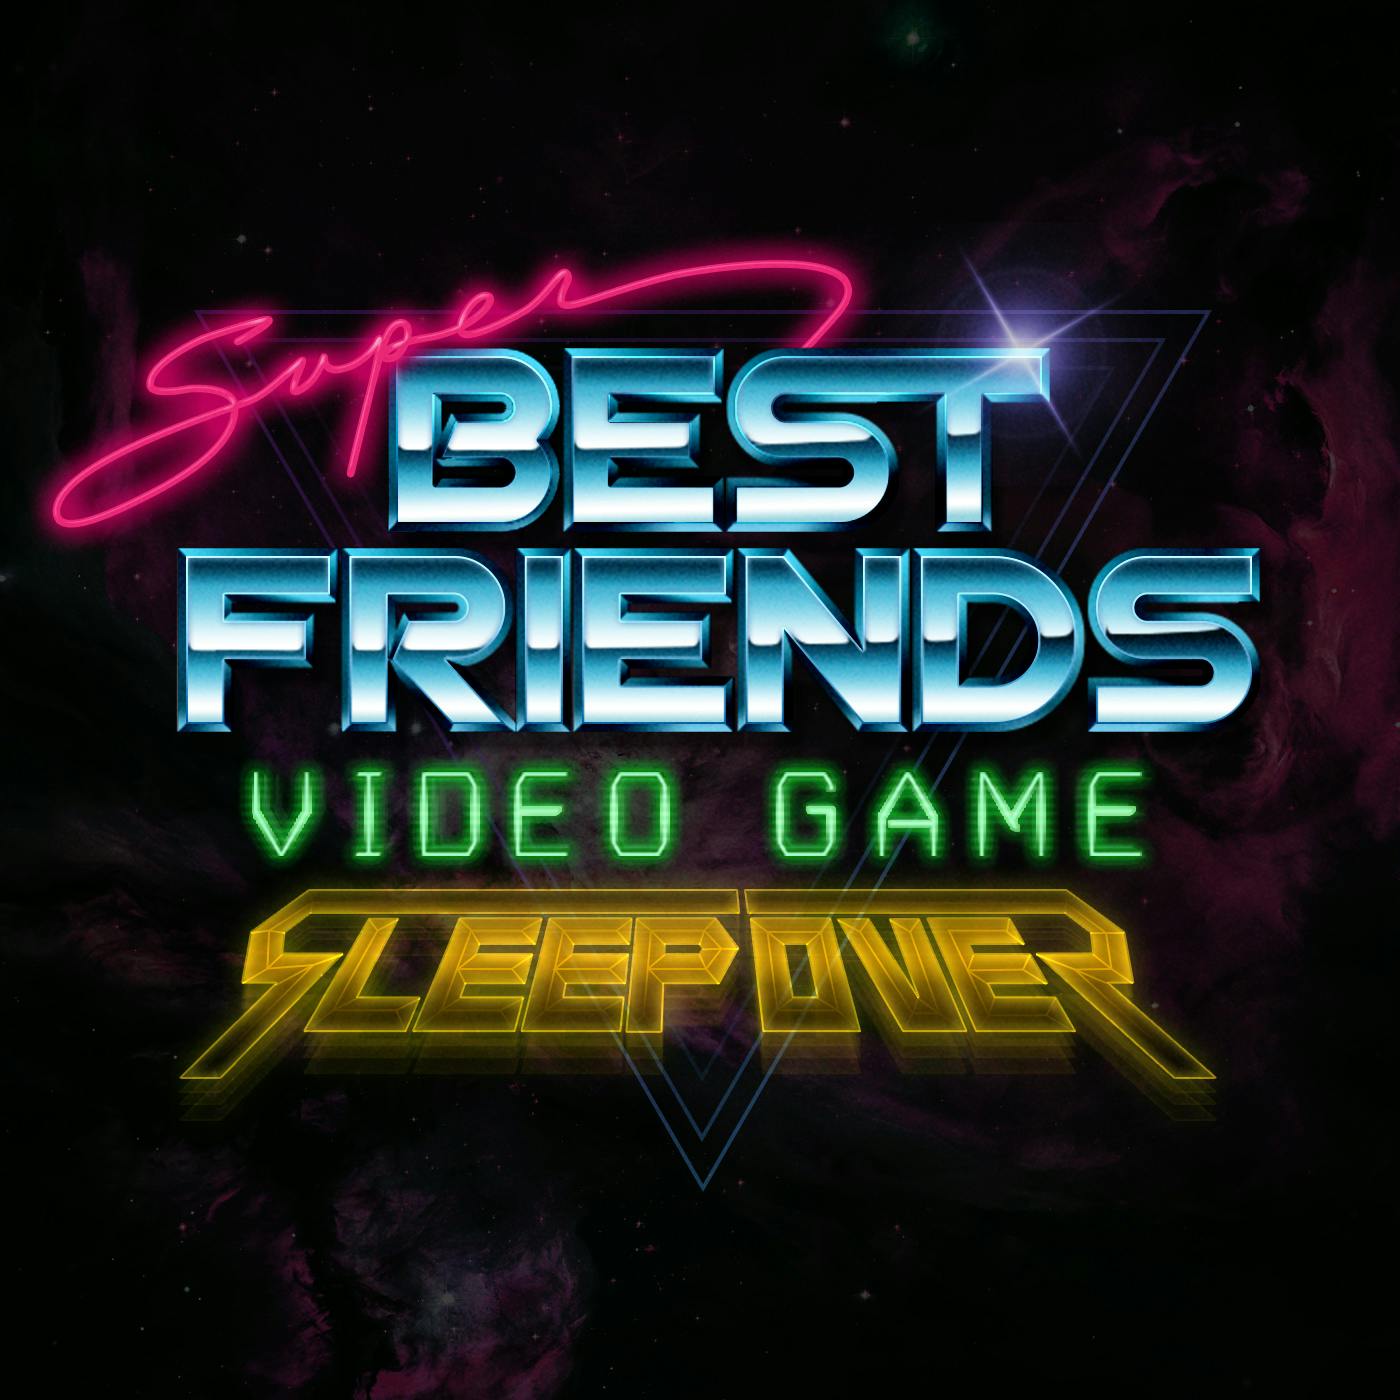 Super Best Friends Video Game Sleepover - Episode 40